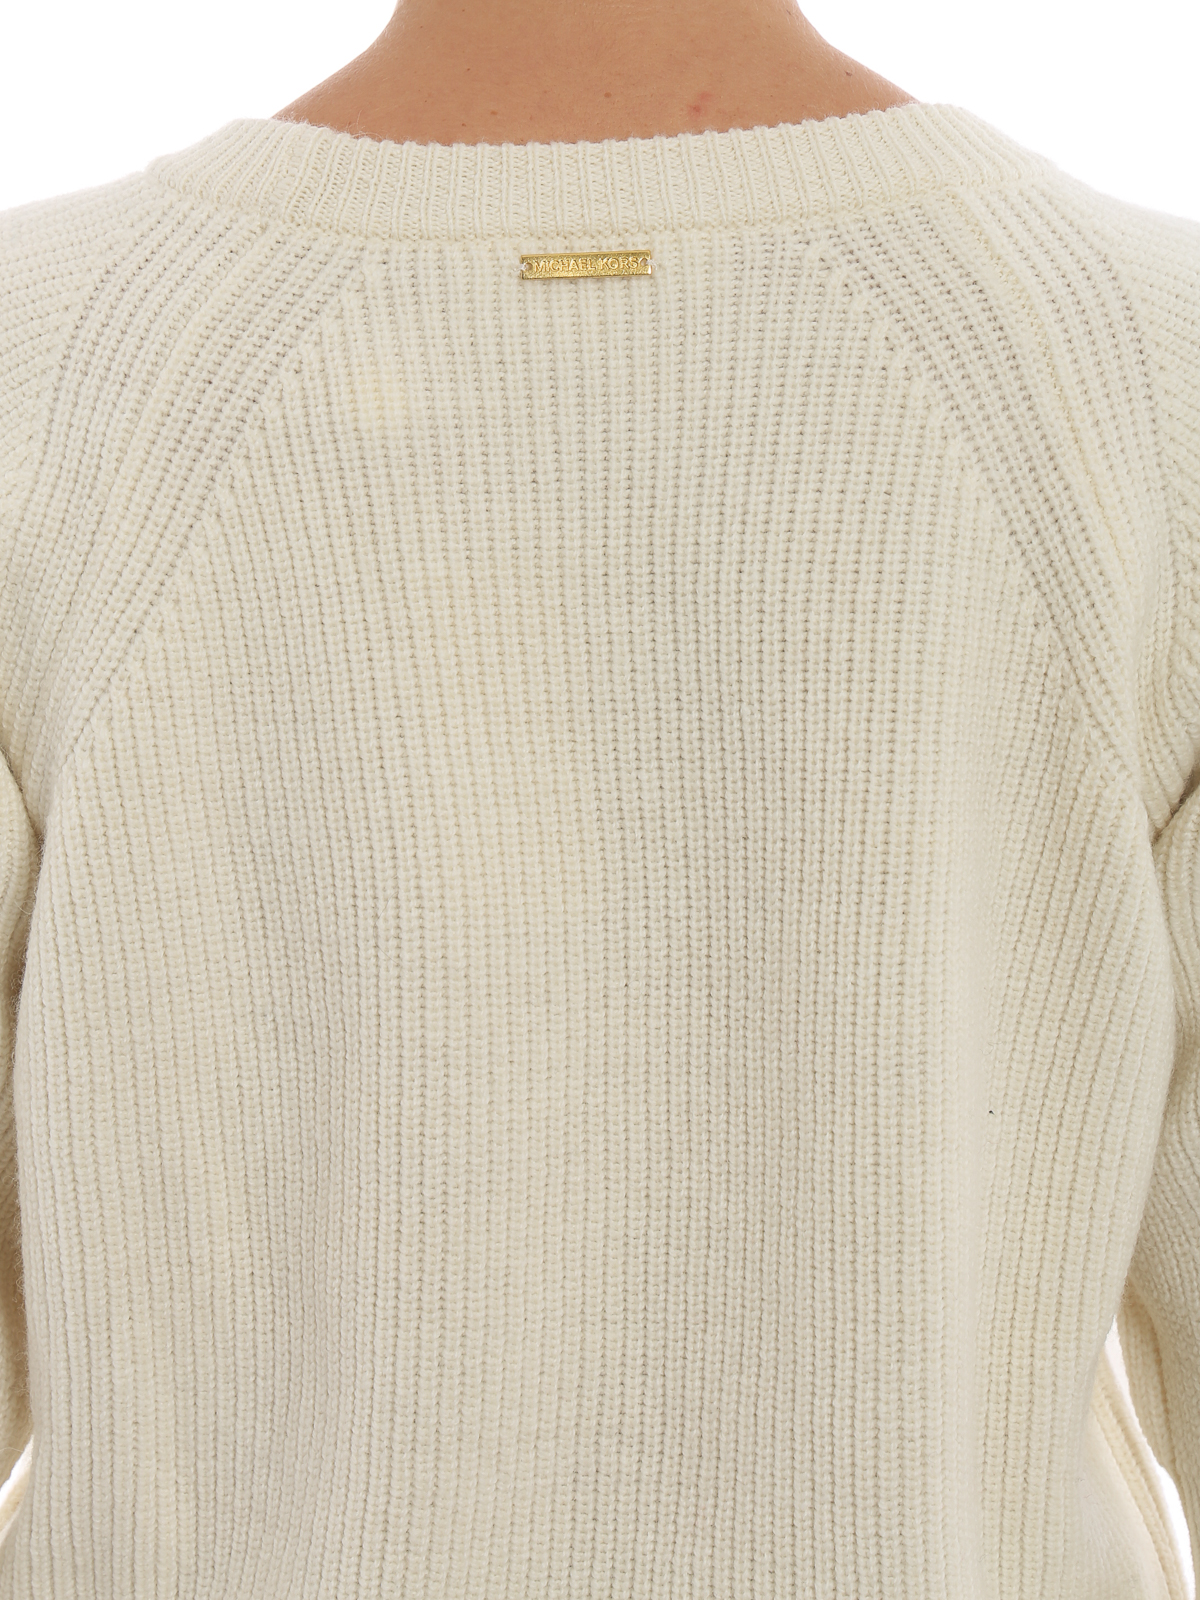 rib knitted sweater - یقه گرد 